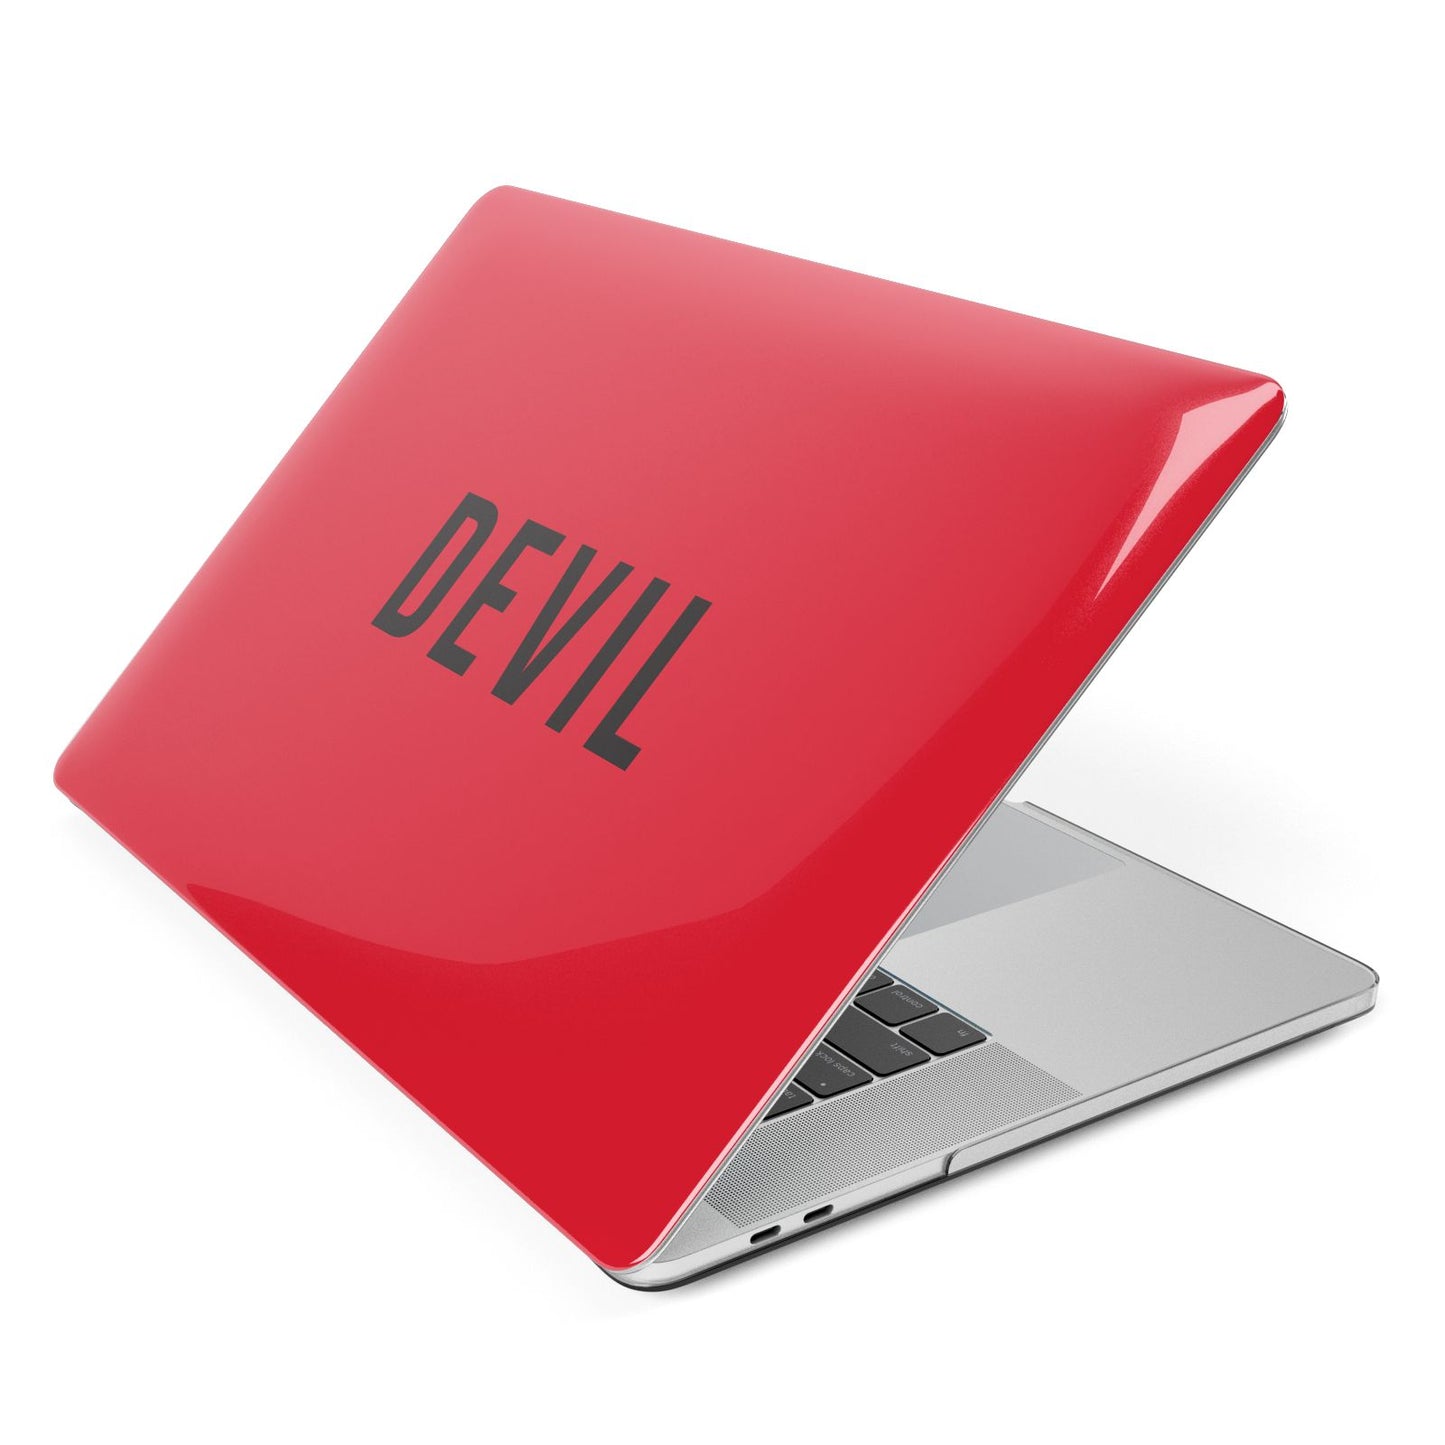 Halloween Red Devil Apple MacBook Case Side View